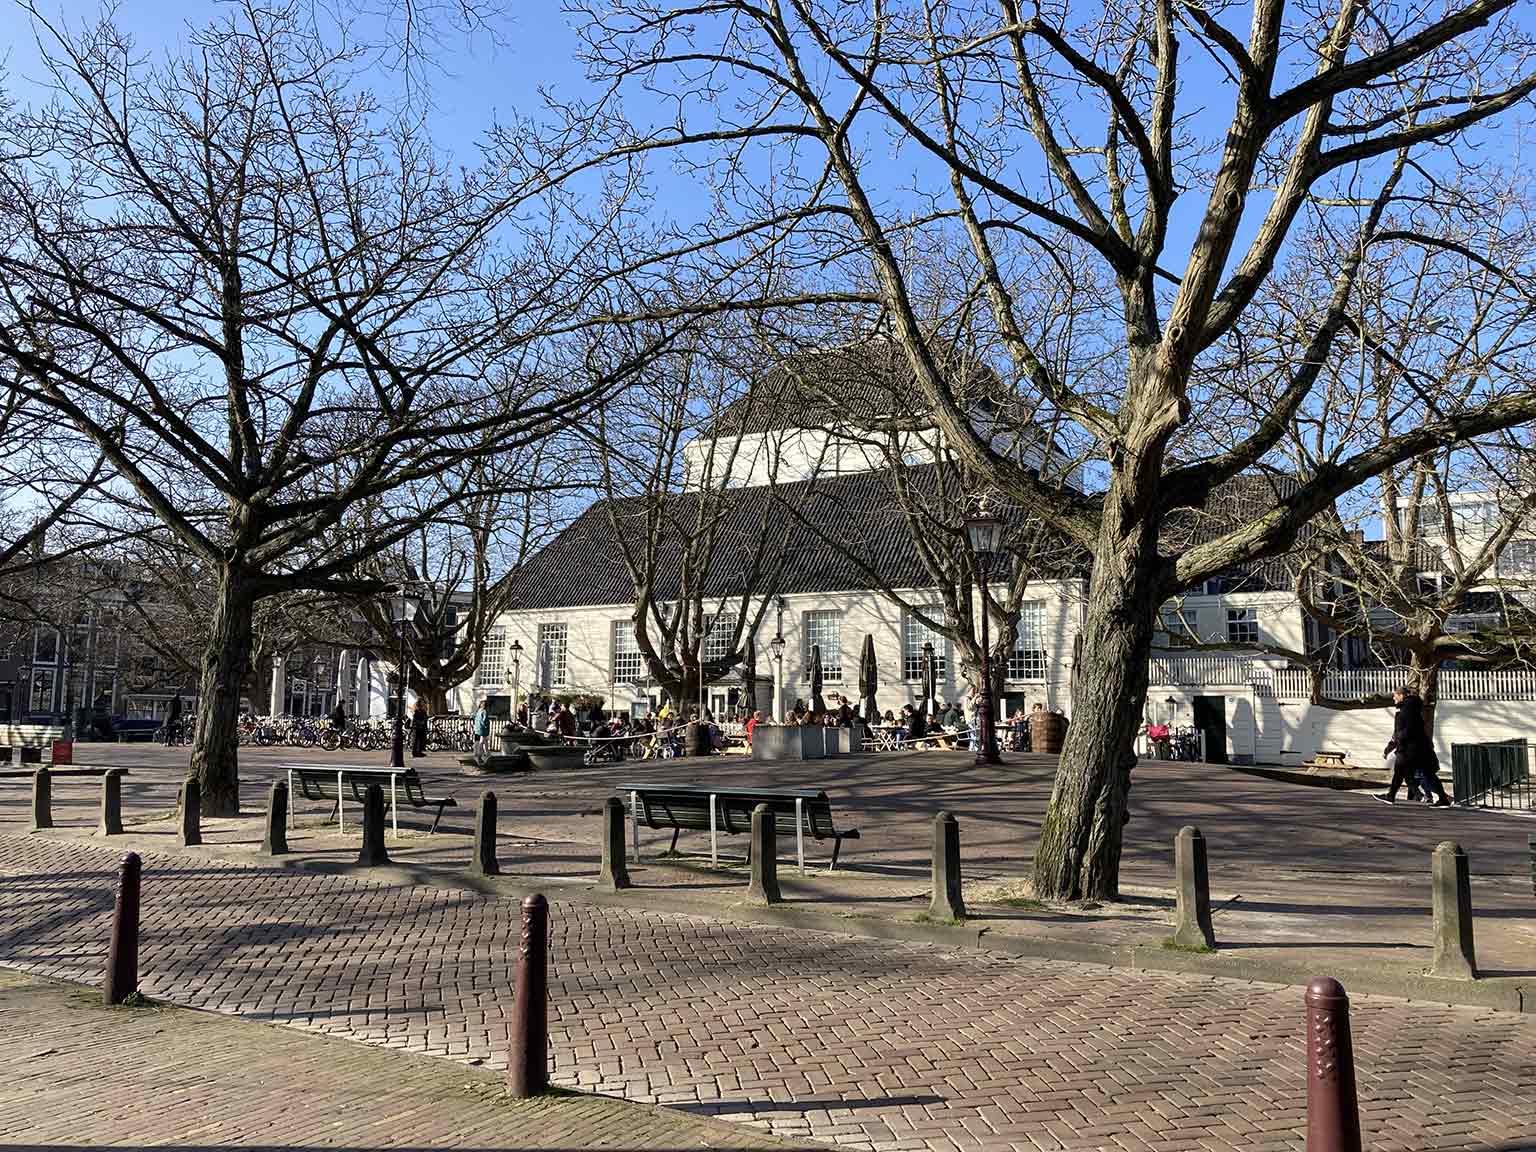 Amstelkerk seen from the Prinsengracht side, Amsterdam